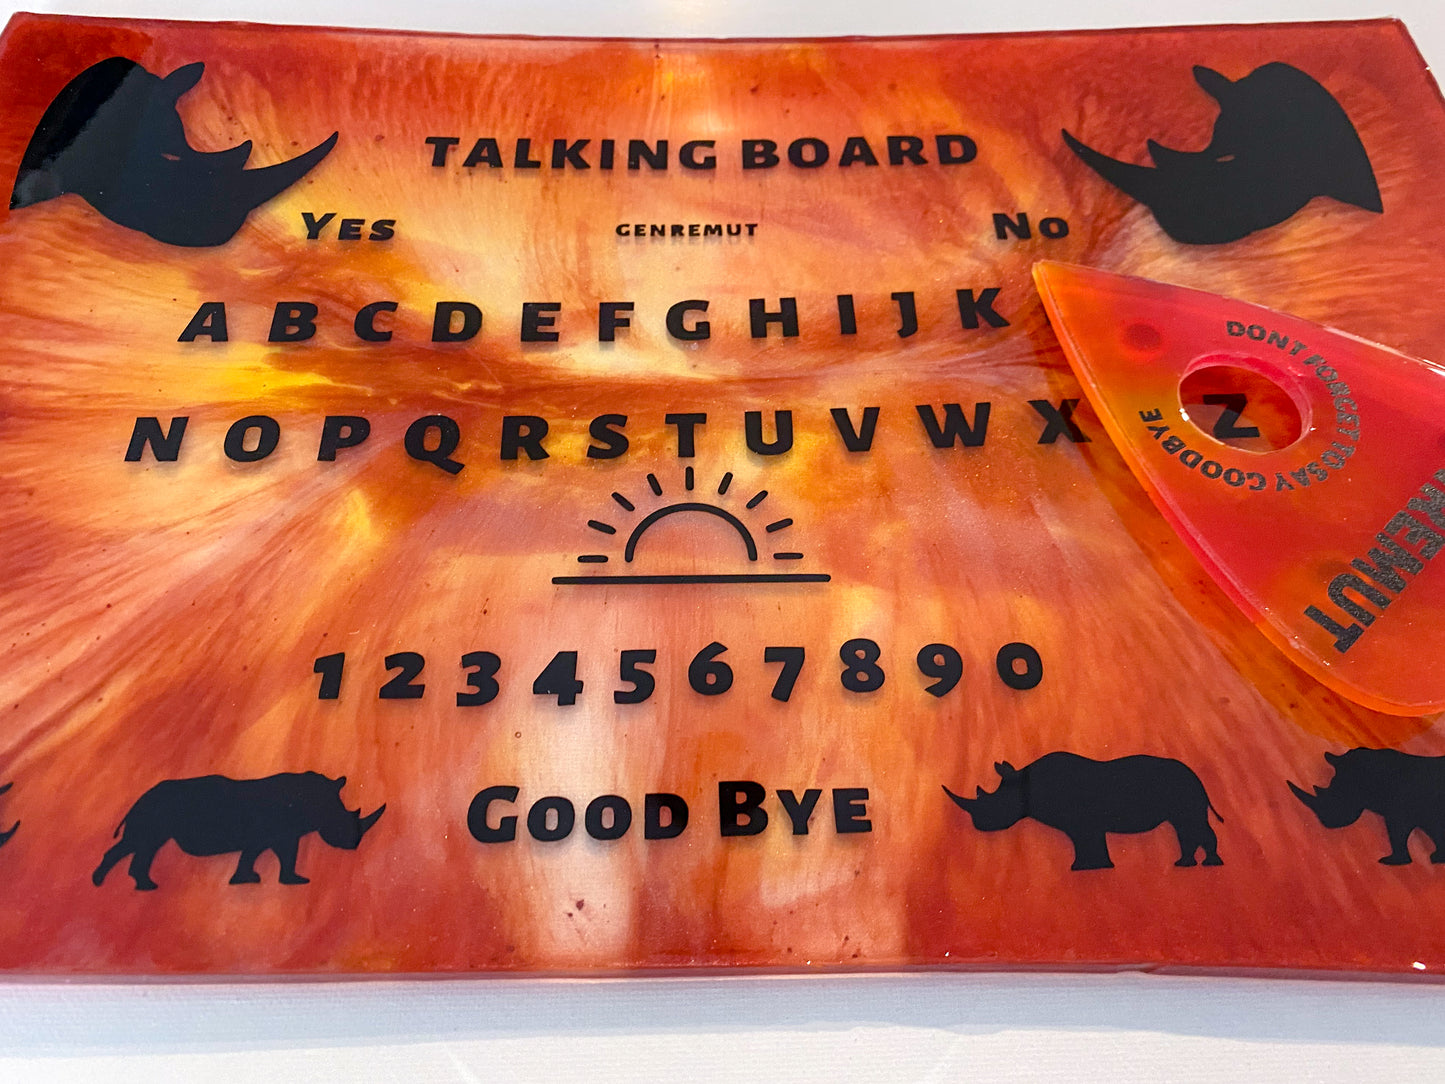 Rhino Handmade Genremut talking board